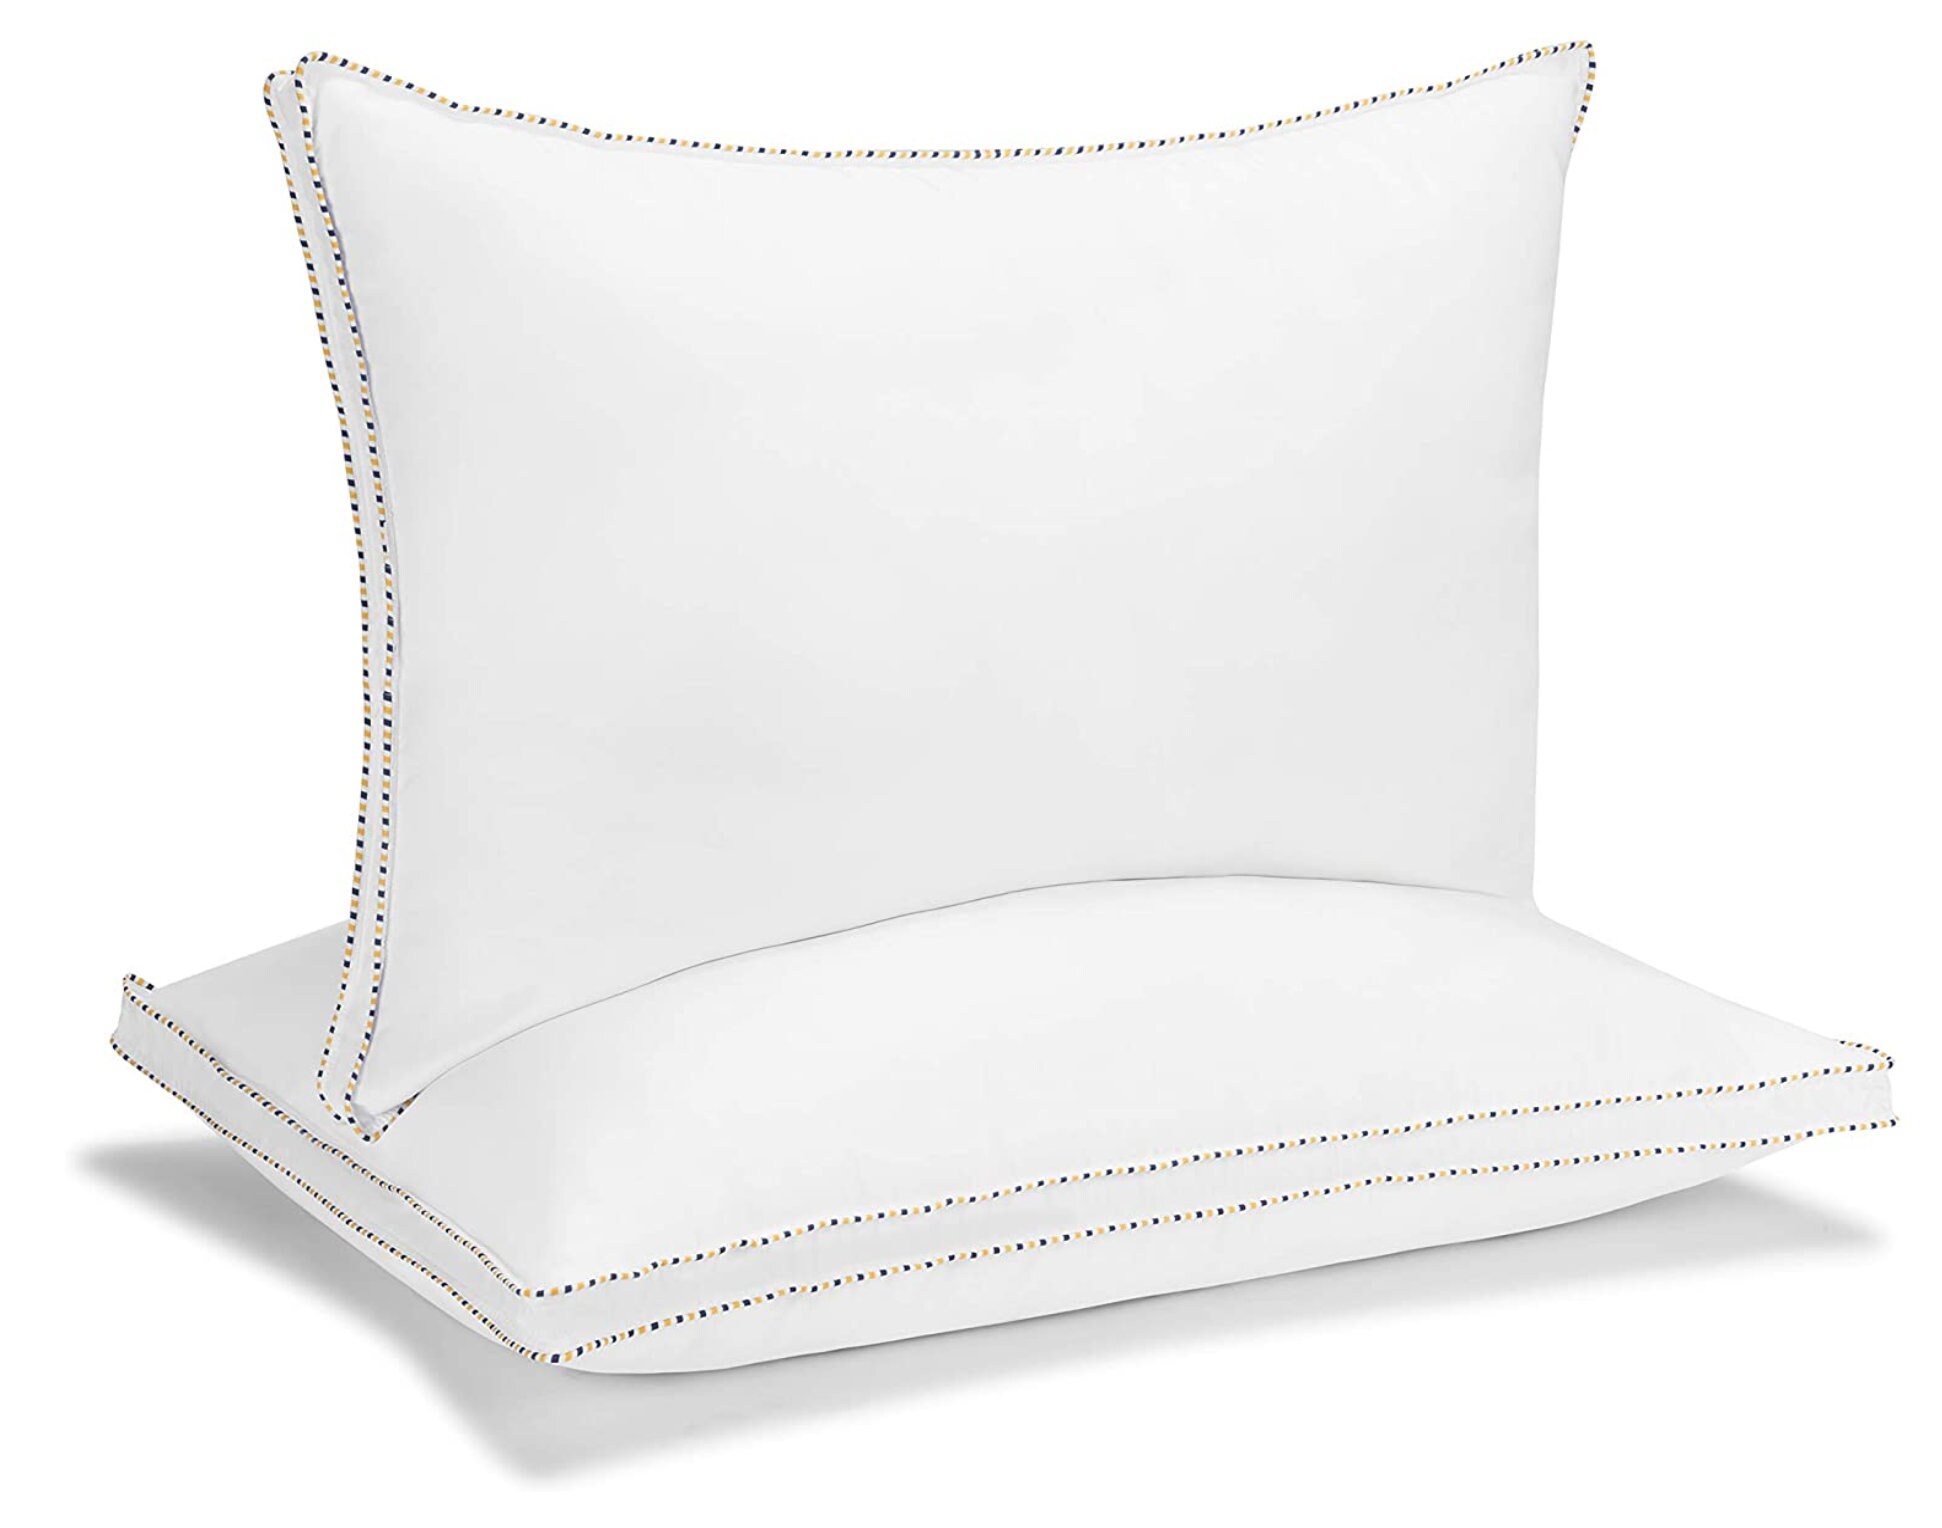 Sleeping Pillow Standard Size Pillow 20x26 White Pillows for Bed